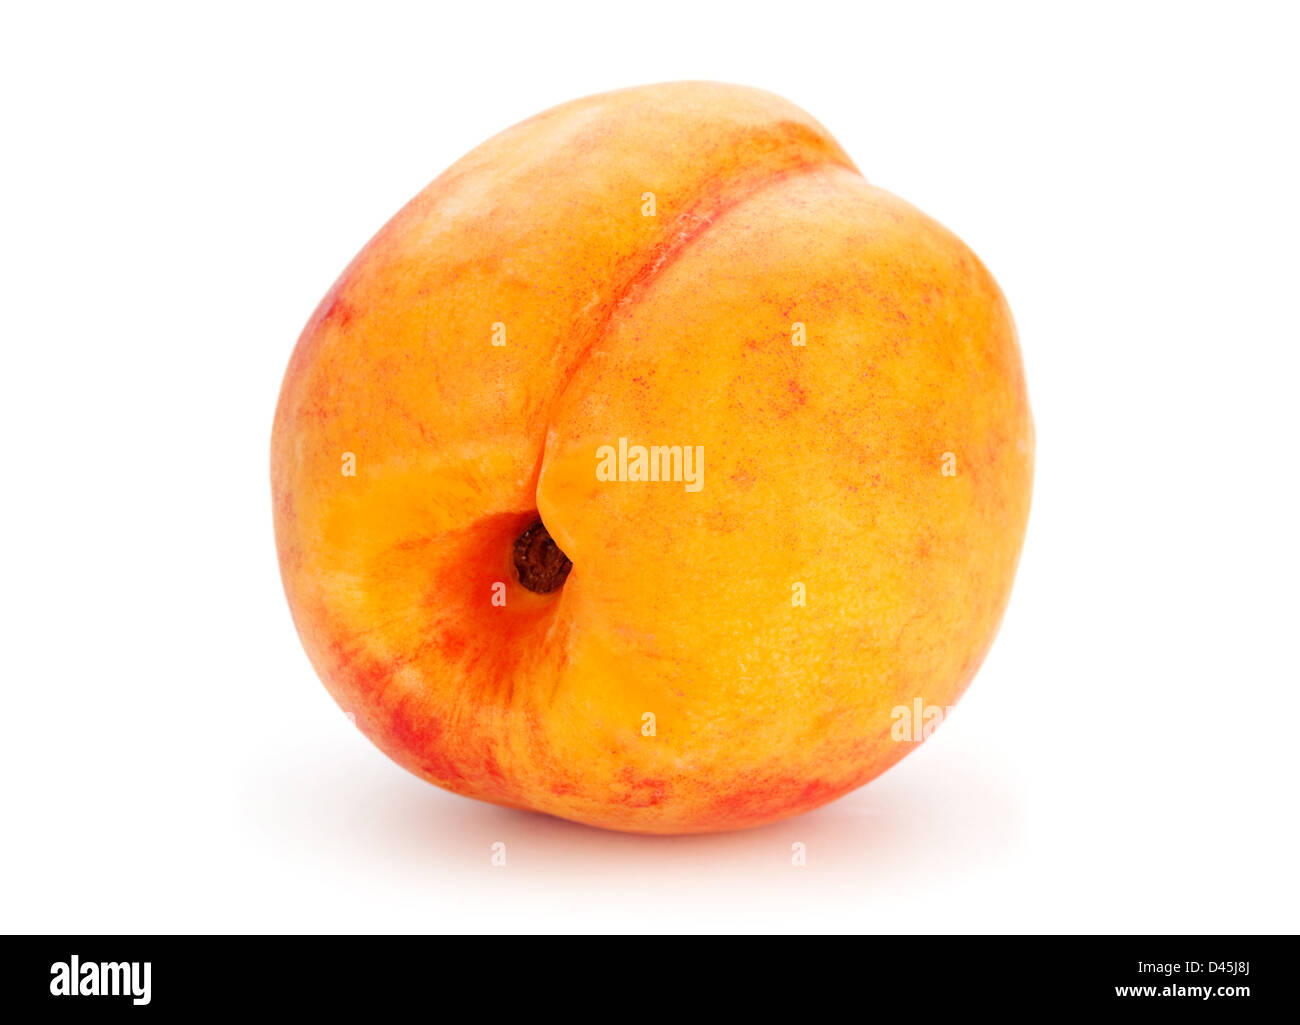 Nectarine peach family fruit isolated on white Stock Photo